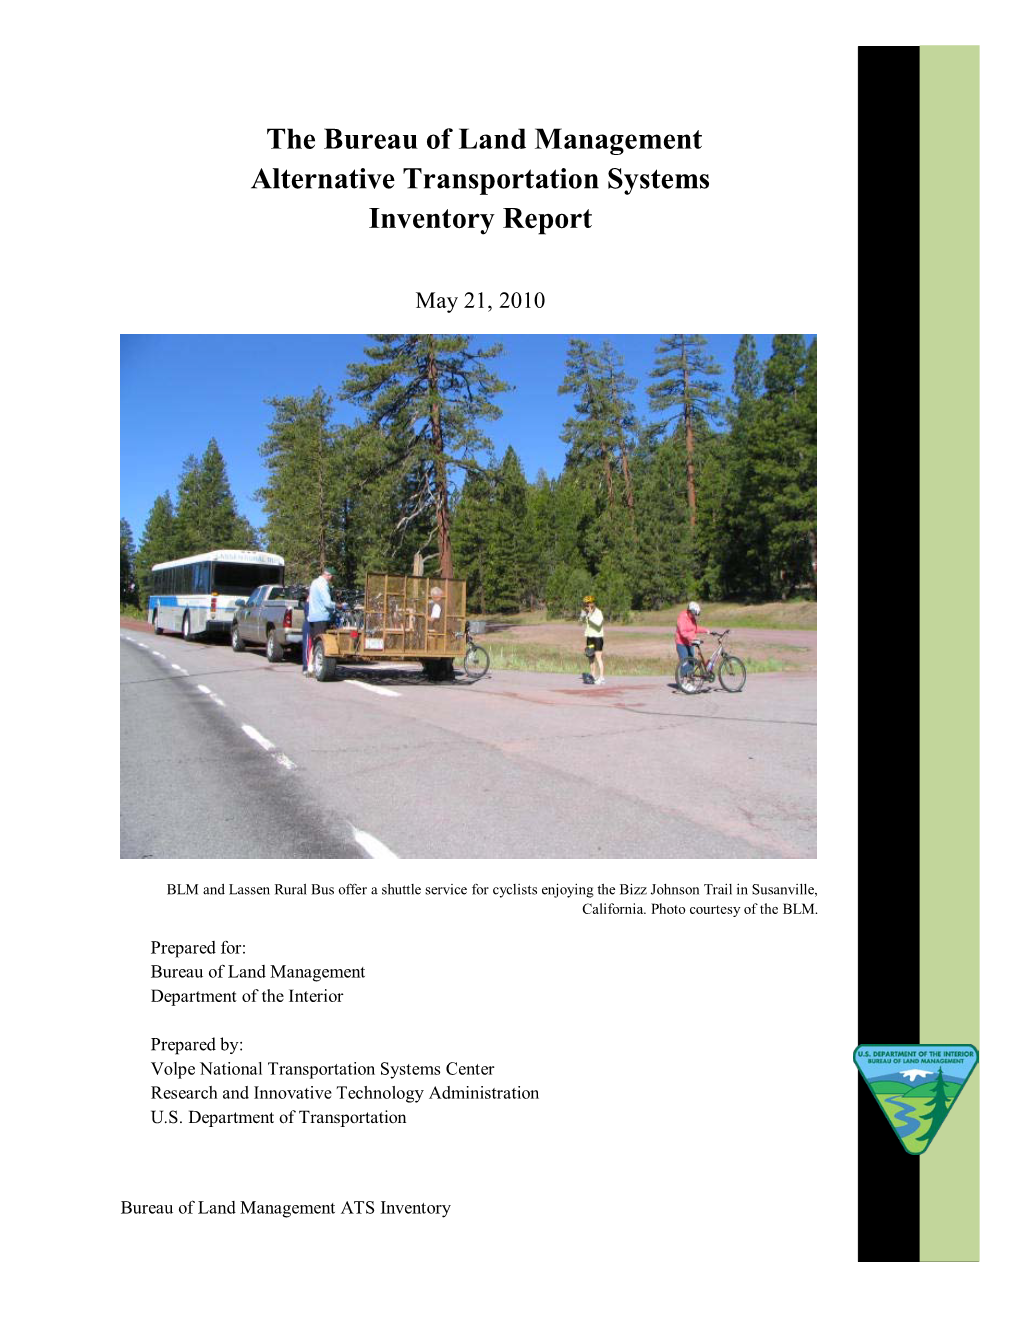 The Bureau of Land Management Alternative Transportation Systems Inventory Report